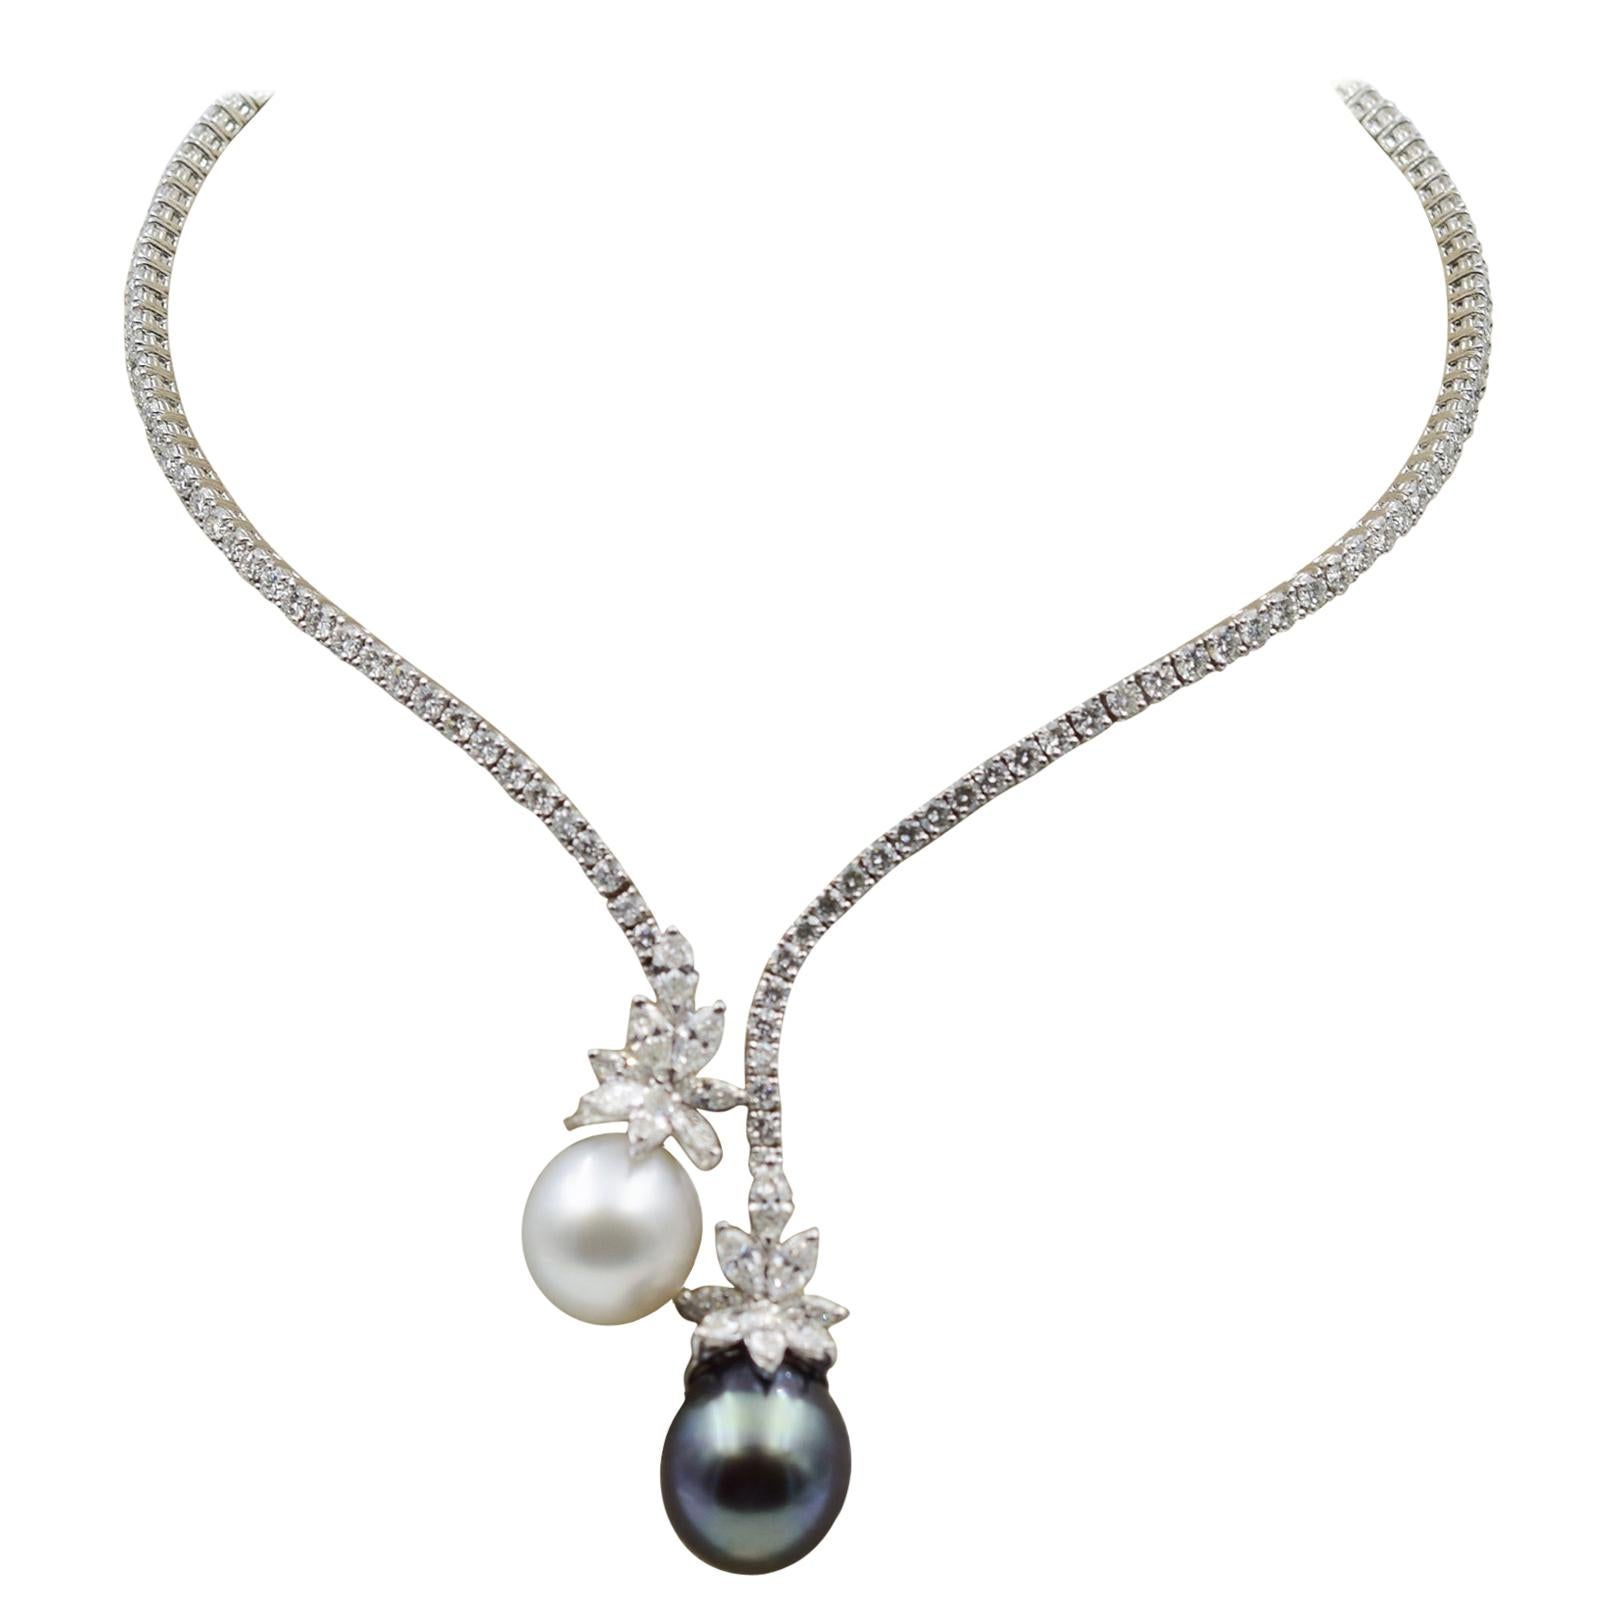 Stefan Hafner 9.00 Carat Diamond Necklace with South Sea Tahitian Pearls